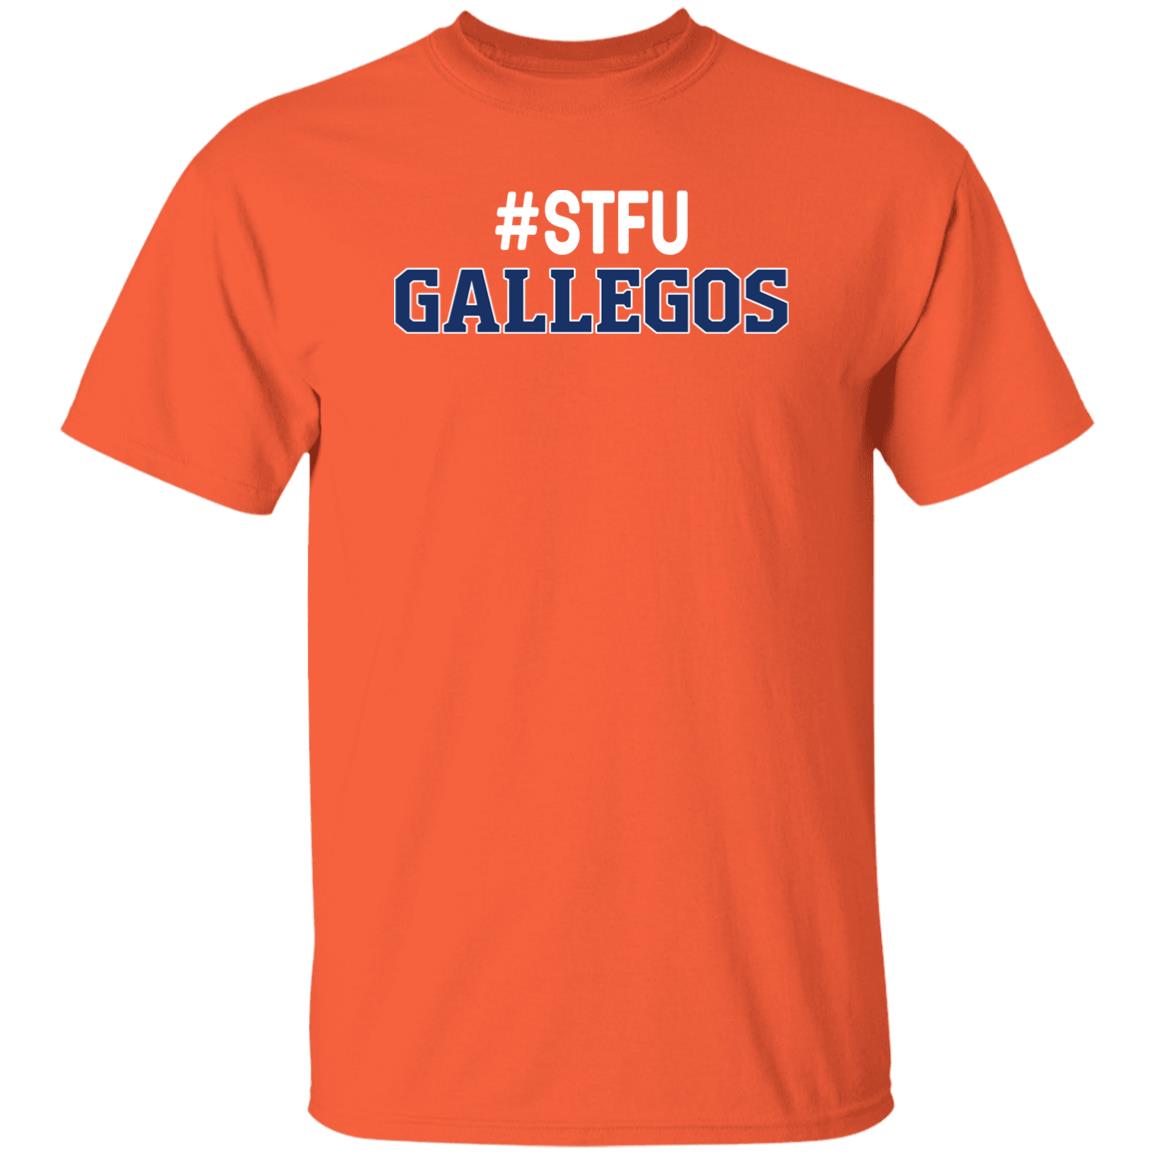 Assburger P.H.D. Esq. #Stfu Gallegos Shirt